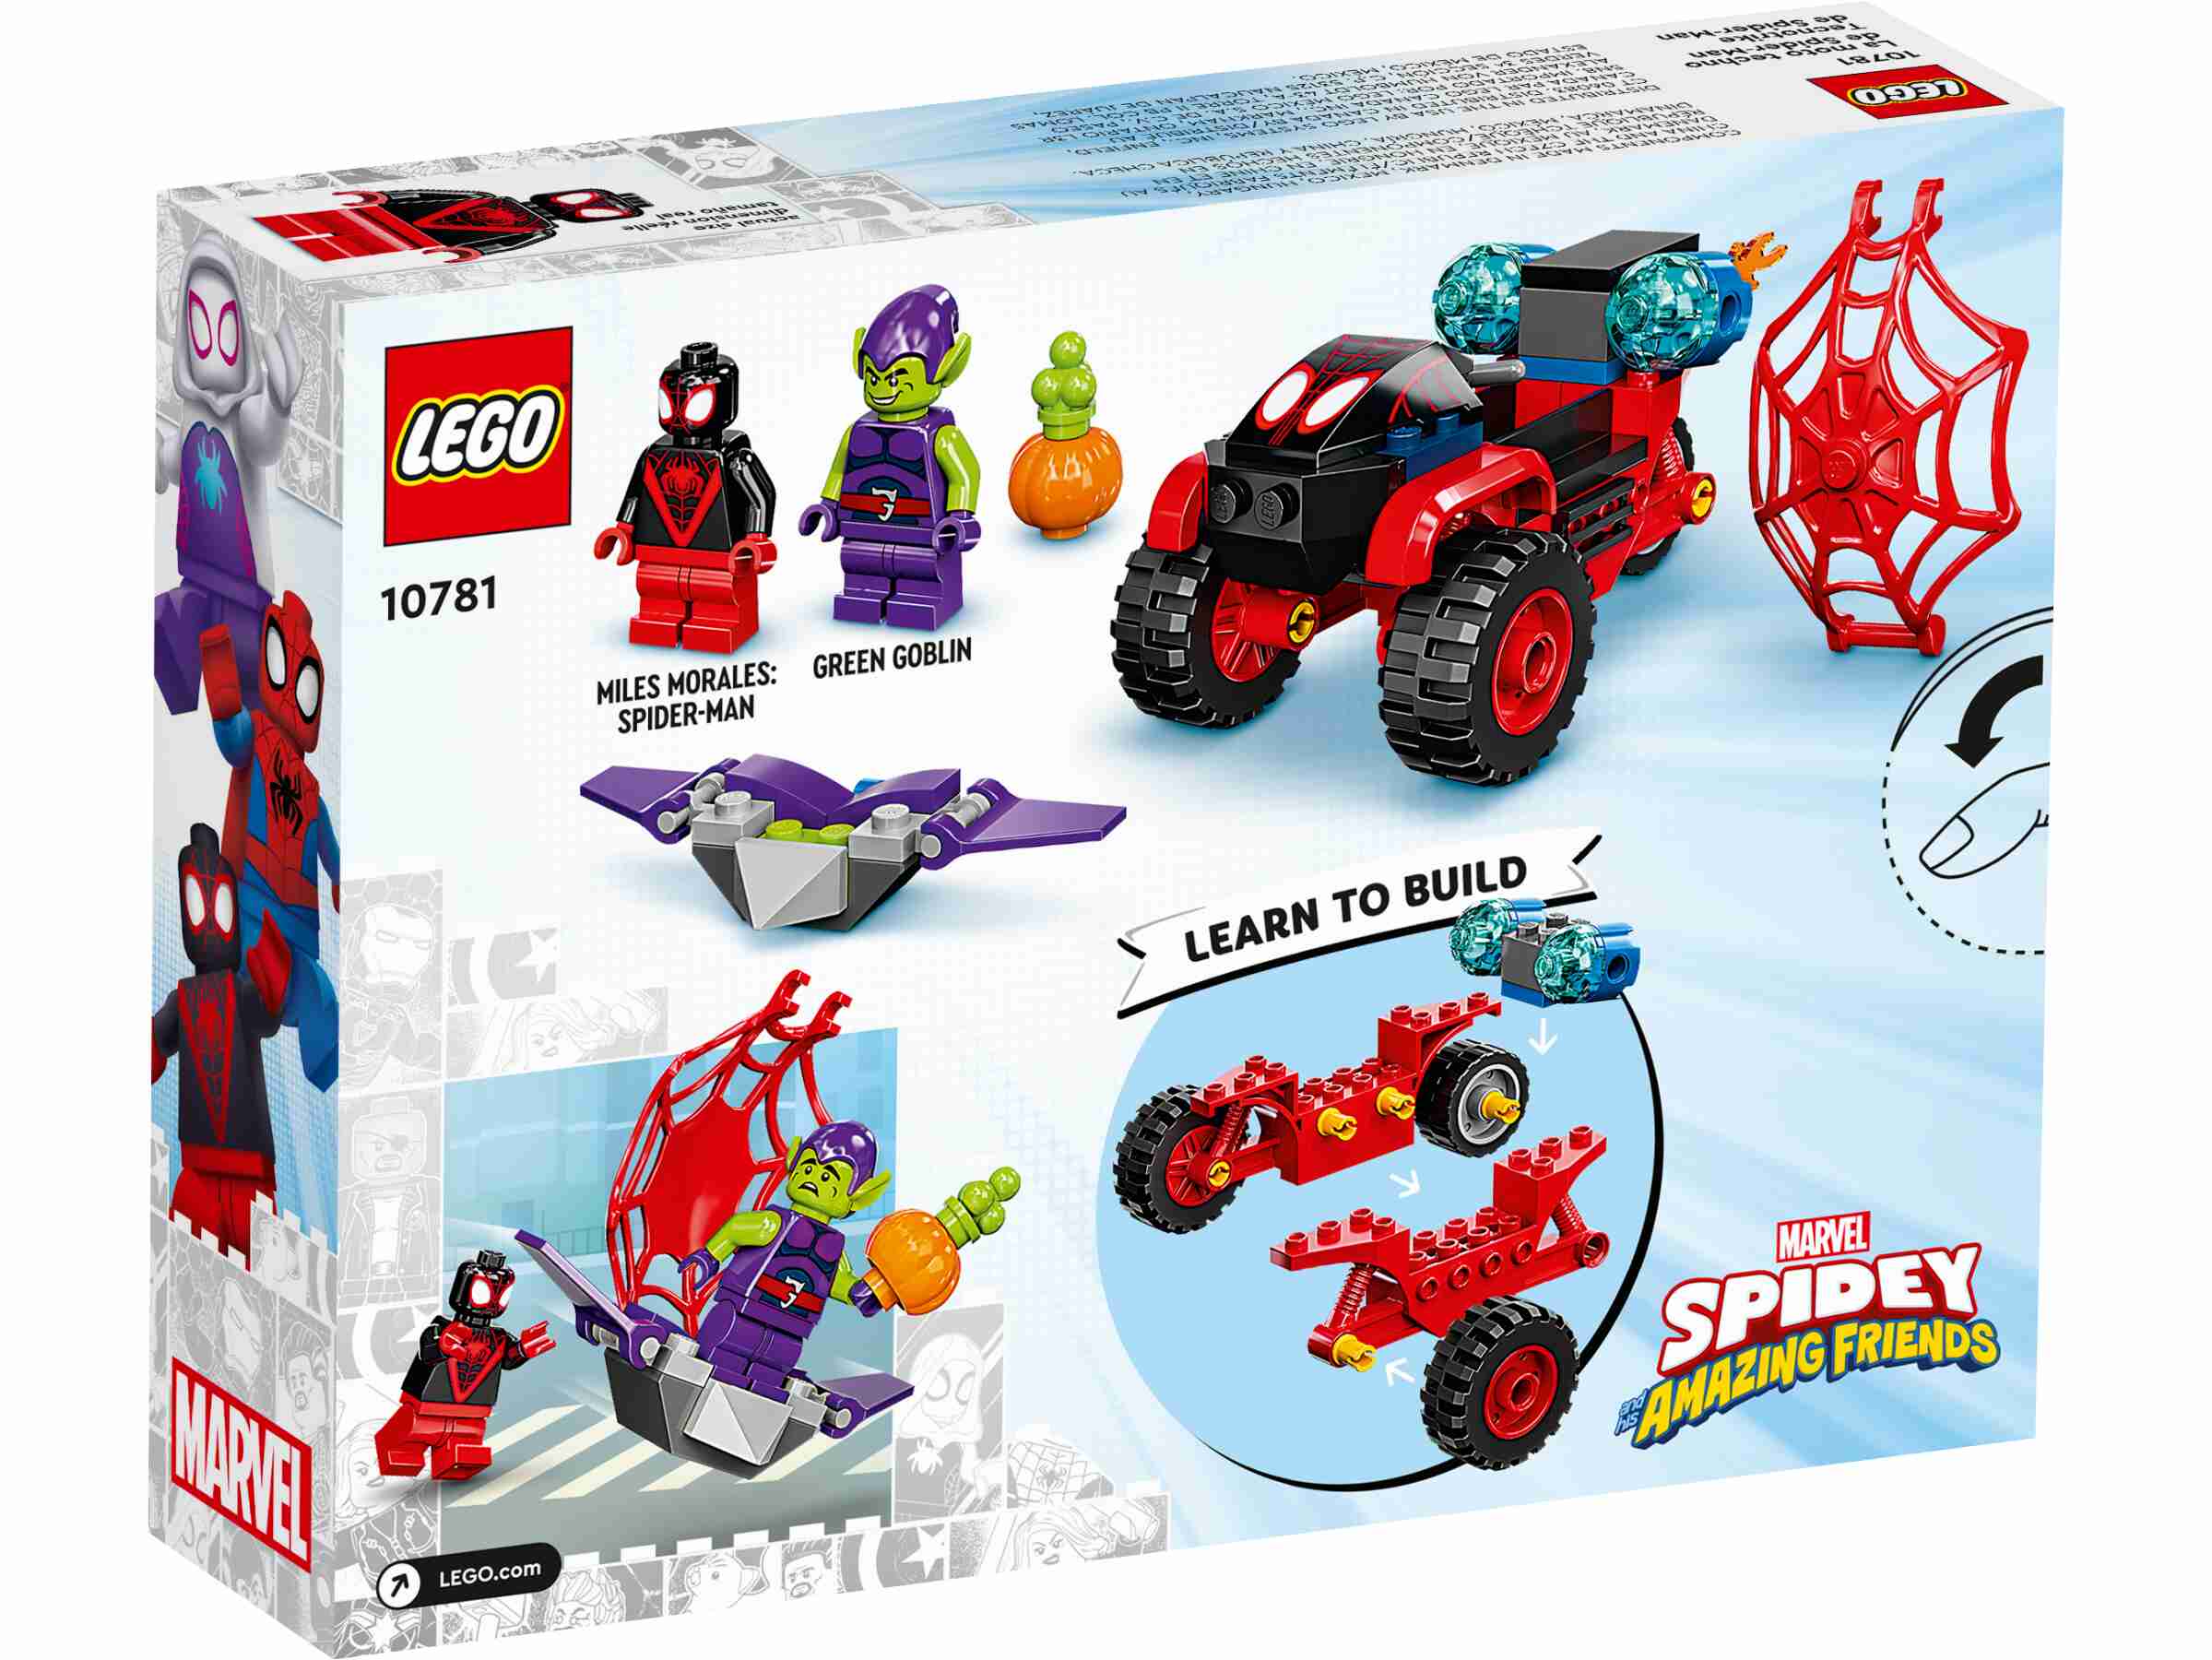 LEGO 10781 Marvel Spidey Miles Morales: Spider-Mans Techno-Trike